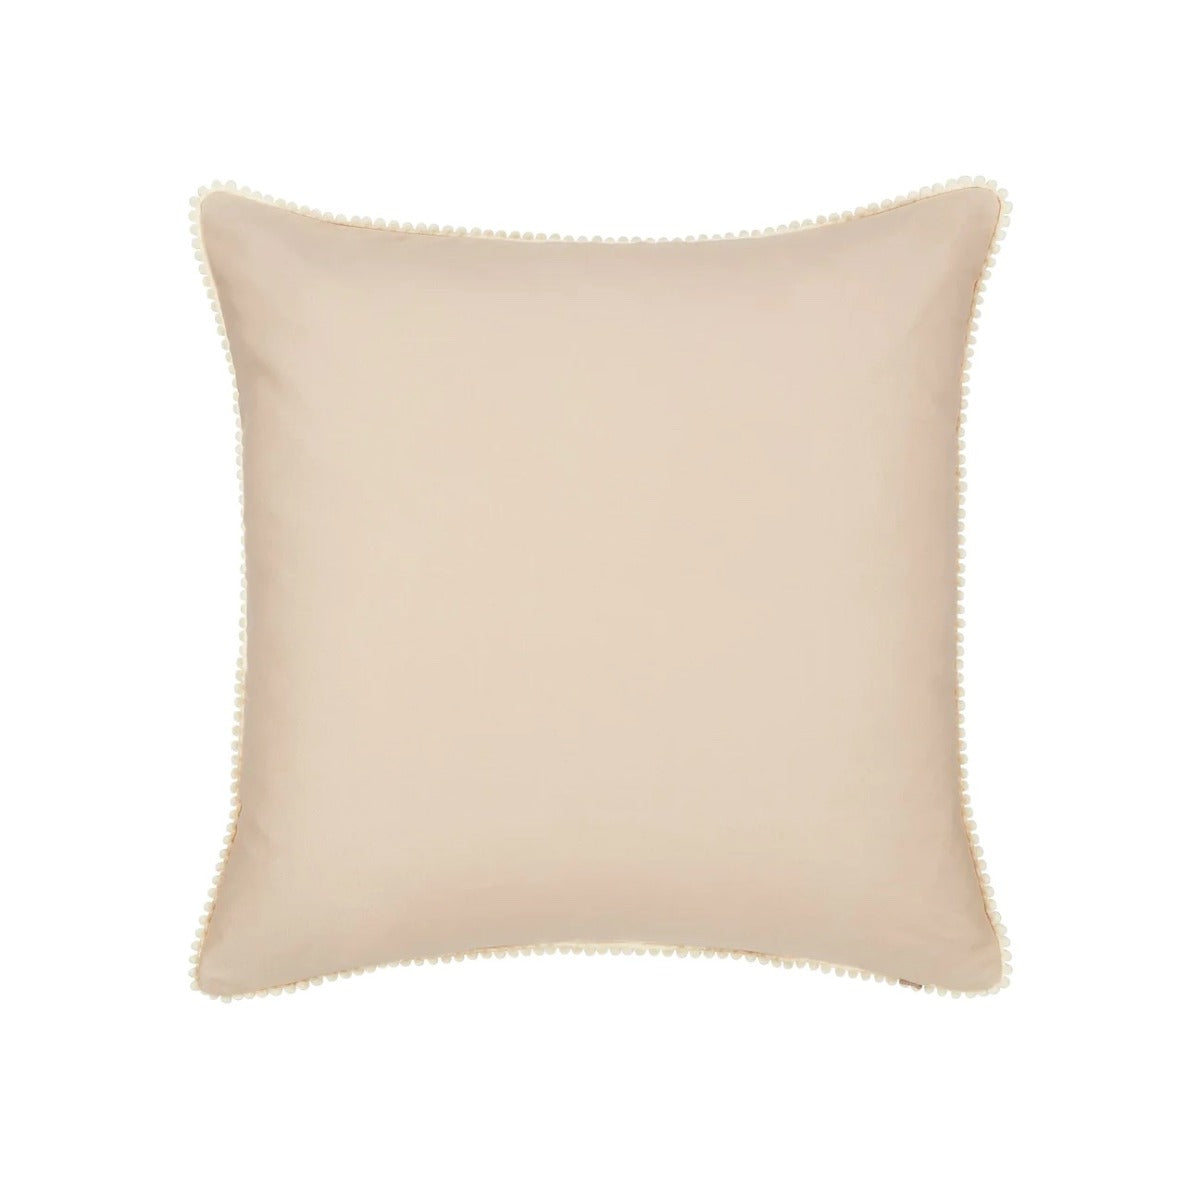 Luxury Silk Square Burnt Red & Cream Ikat Cushion